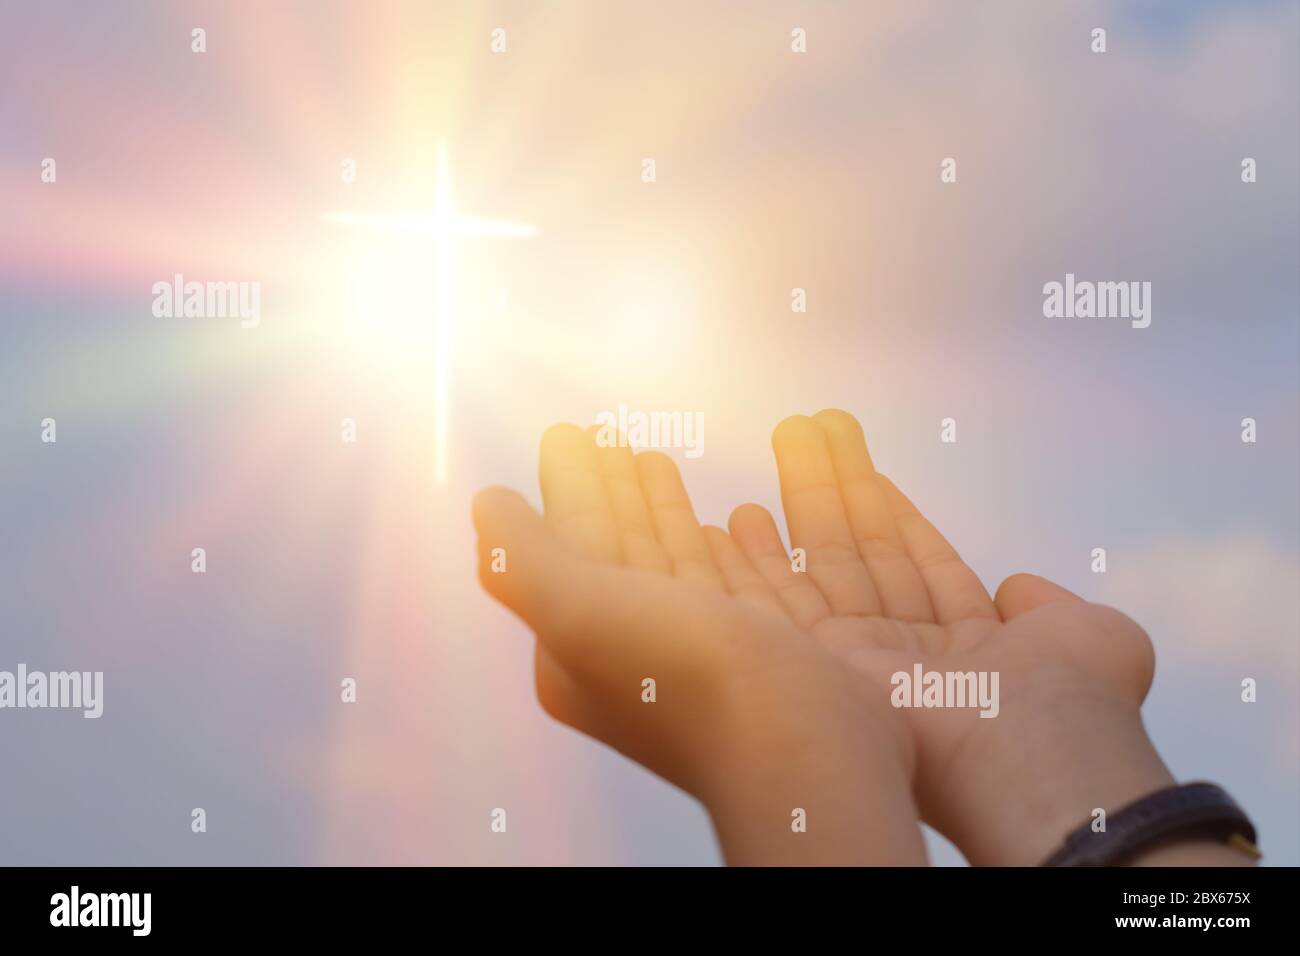 Hands open palm up worship over sunrise background. Catholic praying for blessing from god. Stock Photo